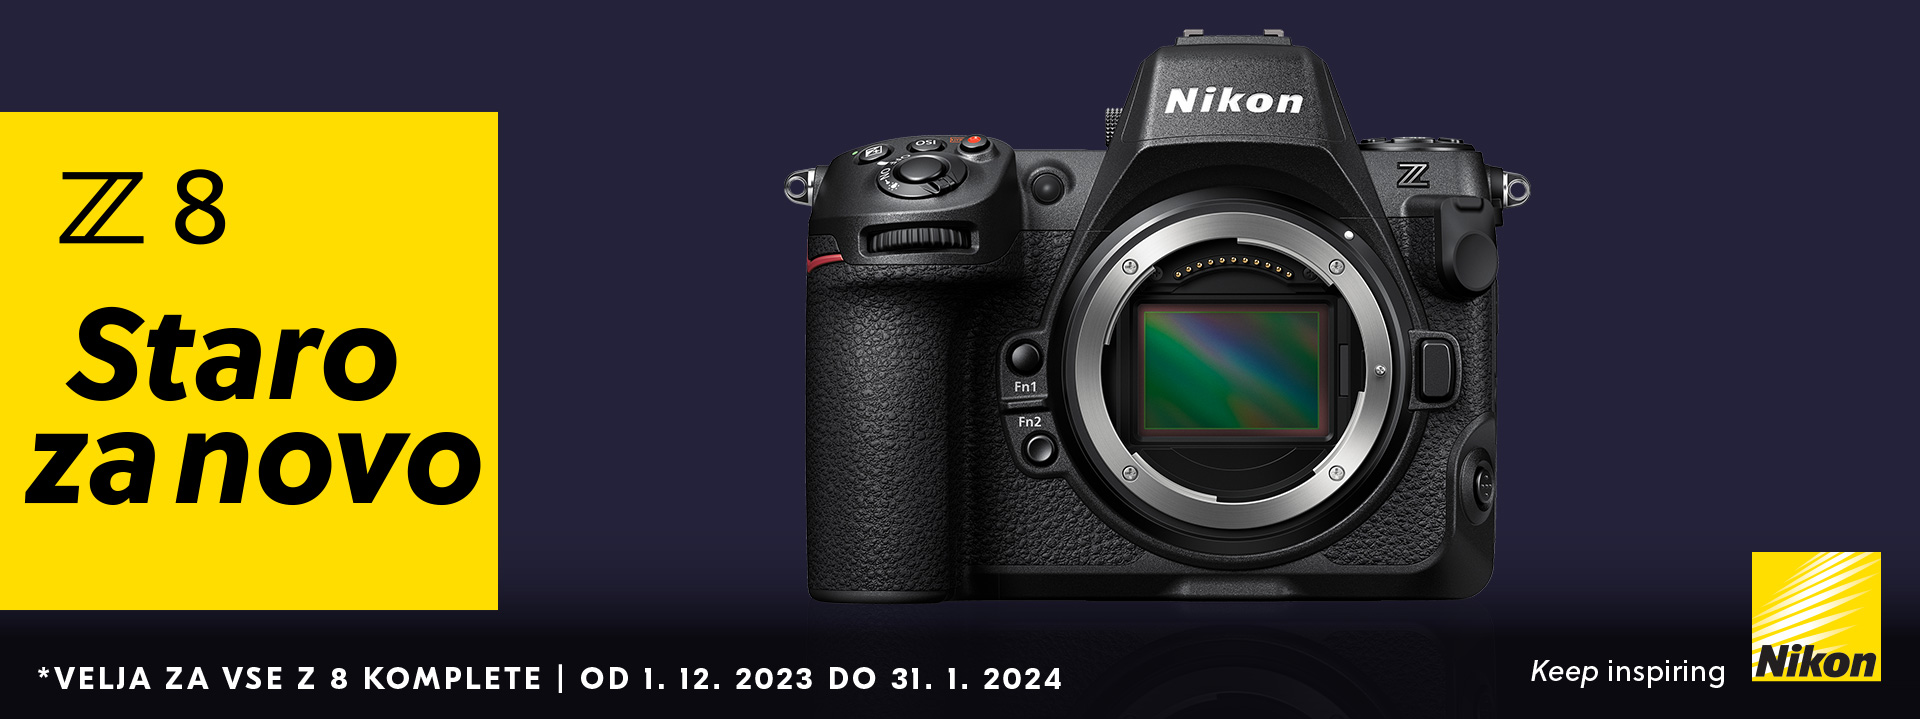 Nikon Z8 Staro za novo